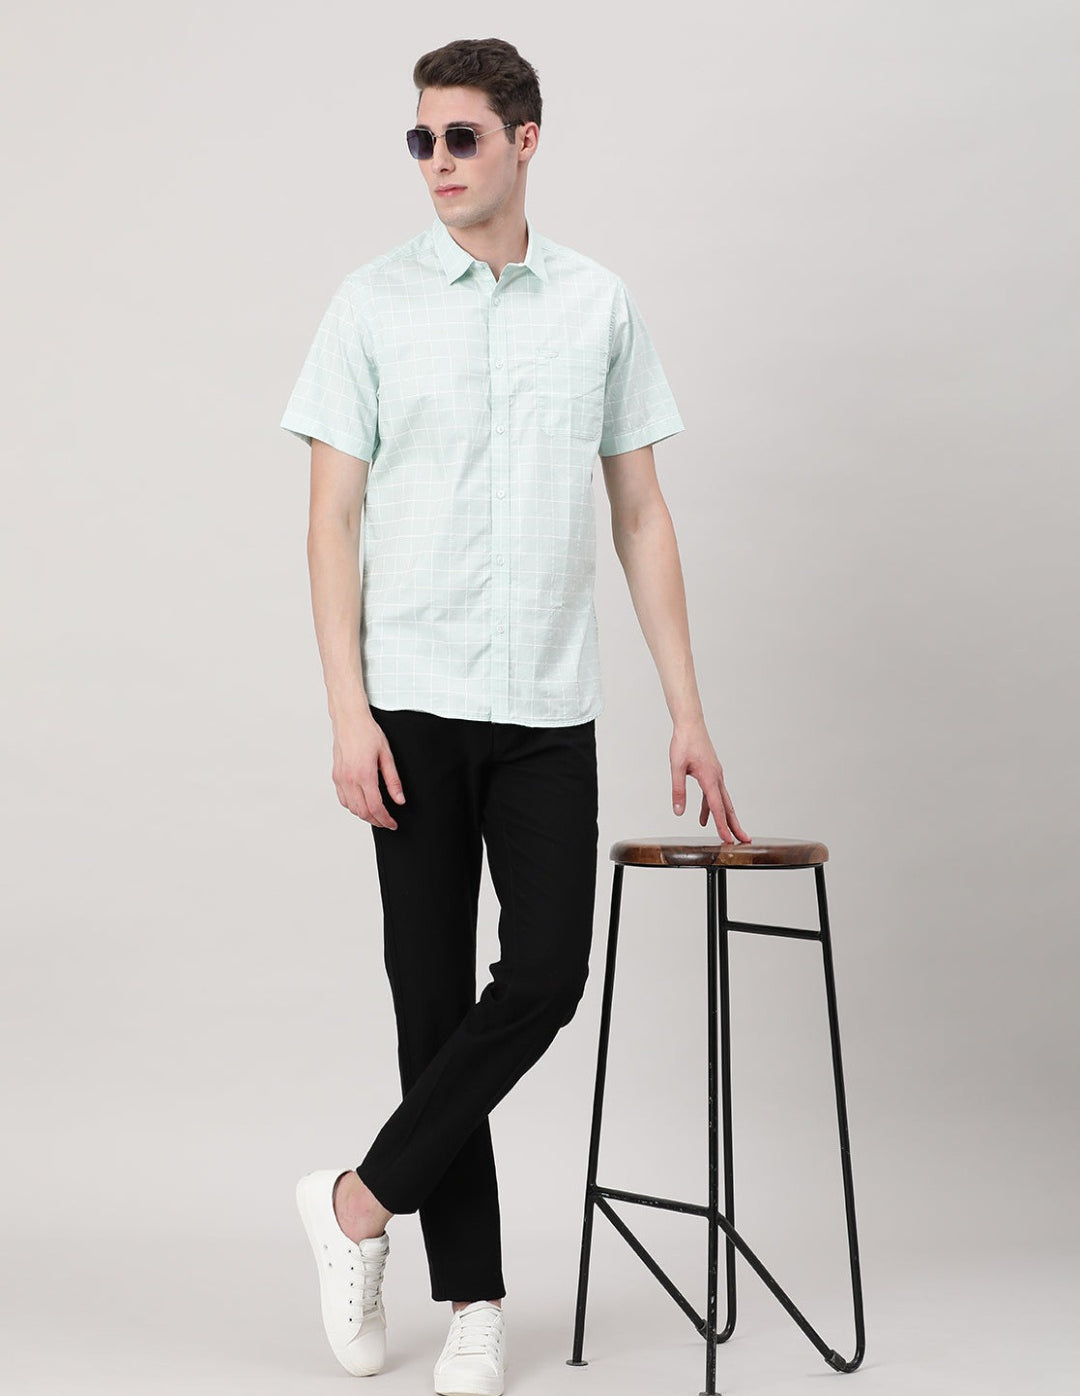 Crocodile Casual Green Half Sleeve Comfort Fit Printed Window Check shirt with Collar